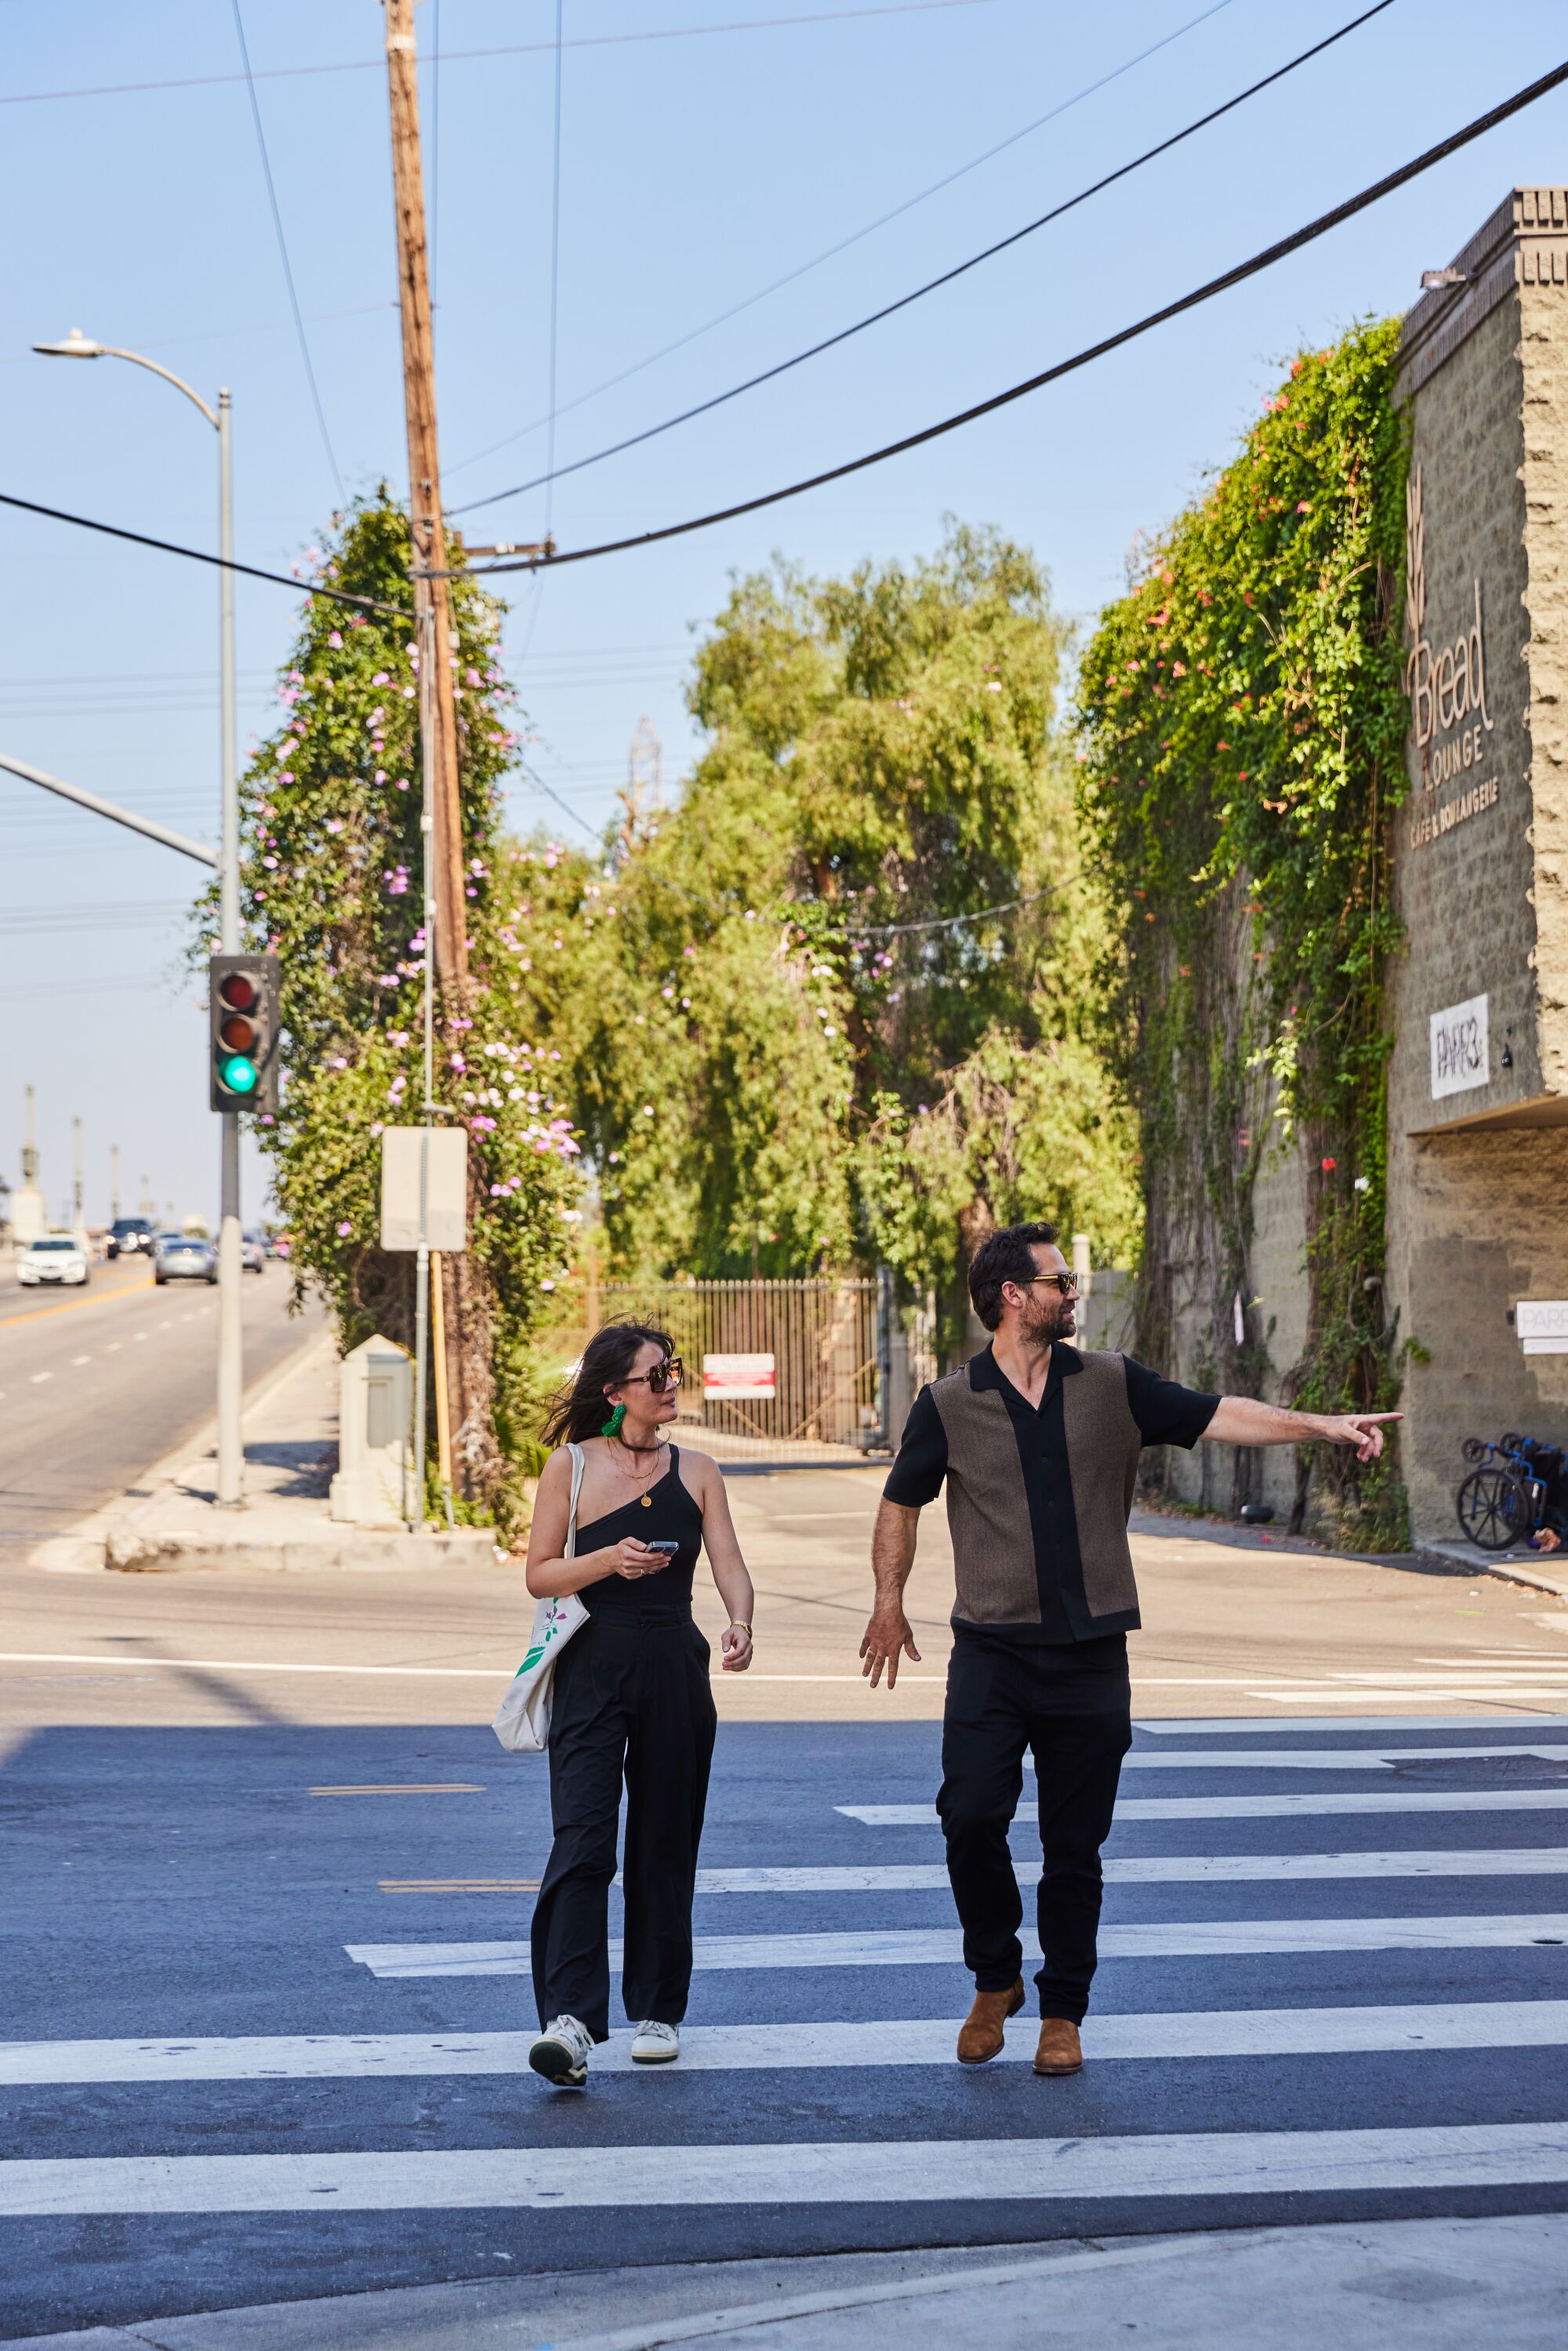 A woman with dark hair and a man with dark hair walk on a crosswalk.